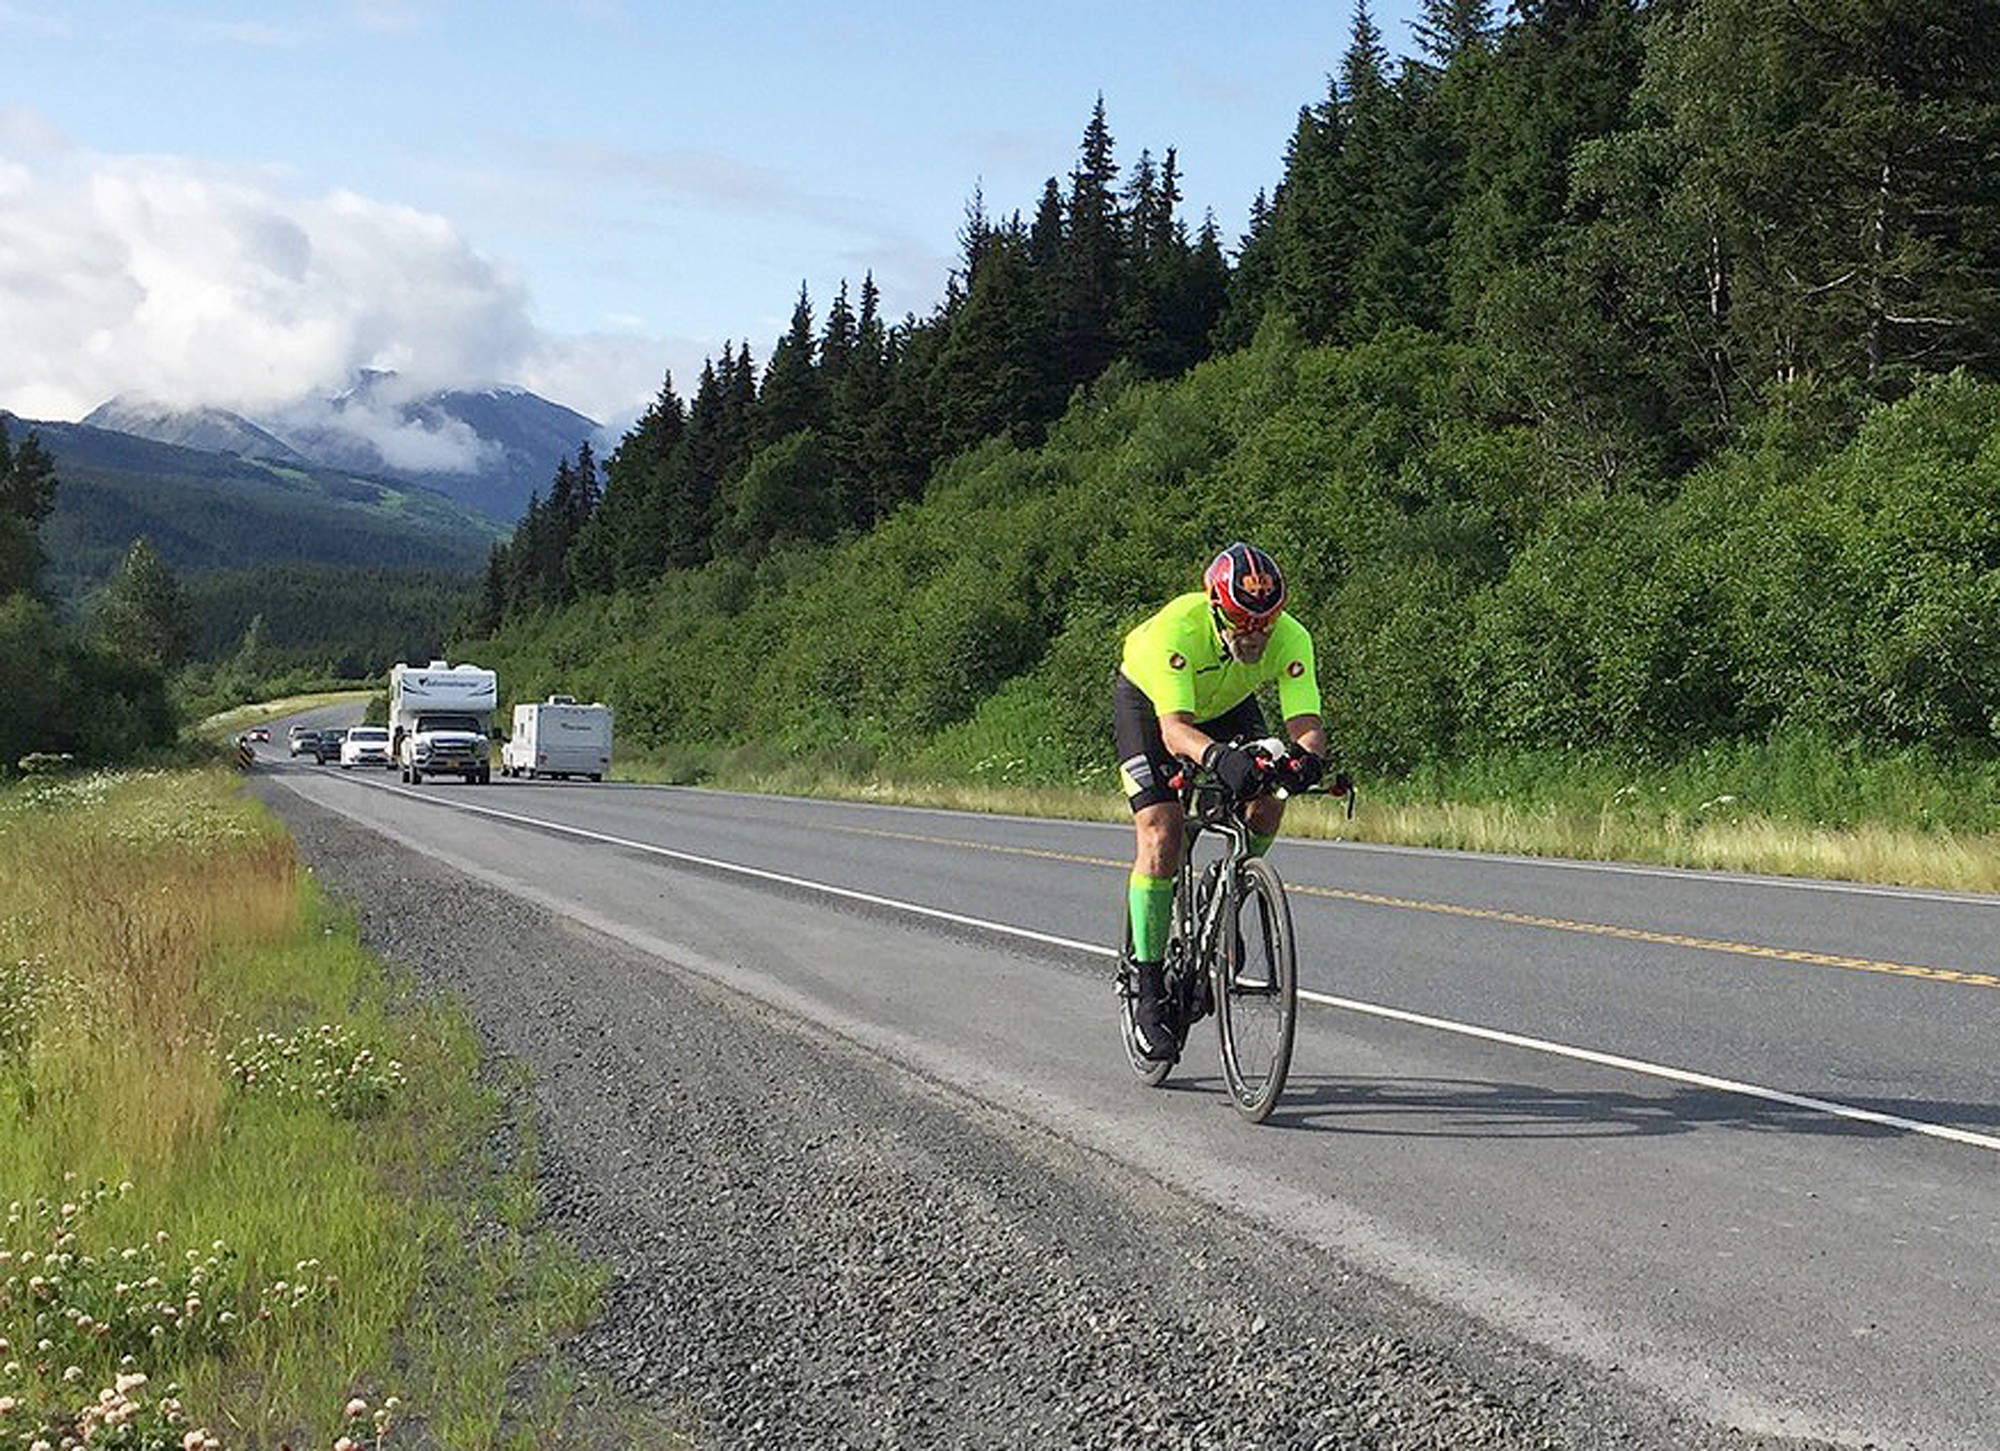 Kenai racer Jeff McDonald cycles up the Seward Highway in the inaugural Alaskaman Extreme Triathlon race in July 2017. (Photo provided by Jeff McDonald)